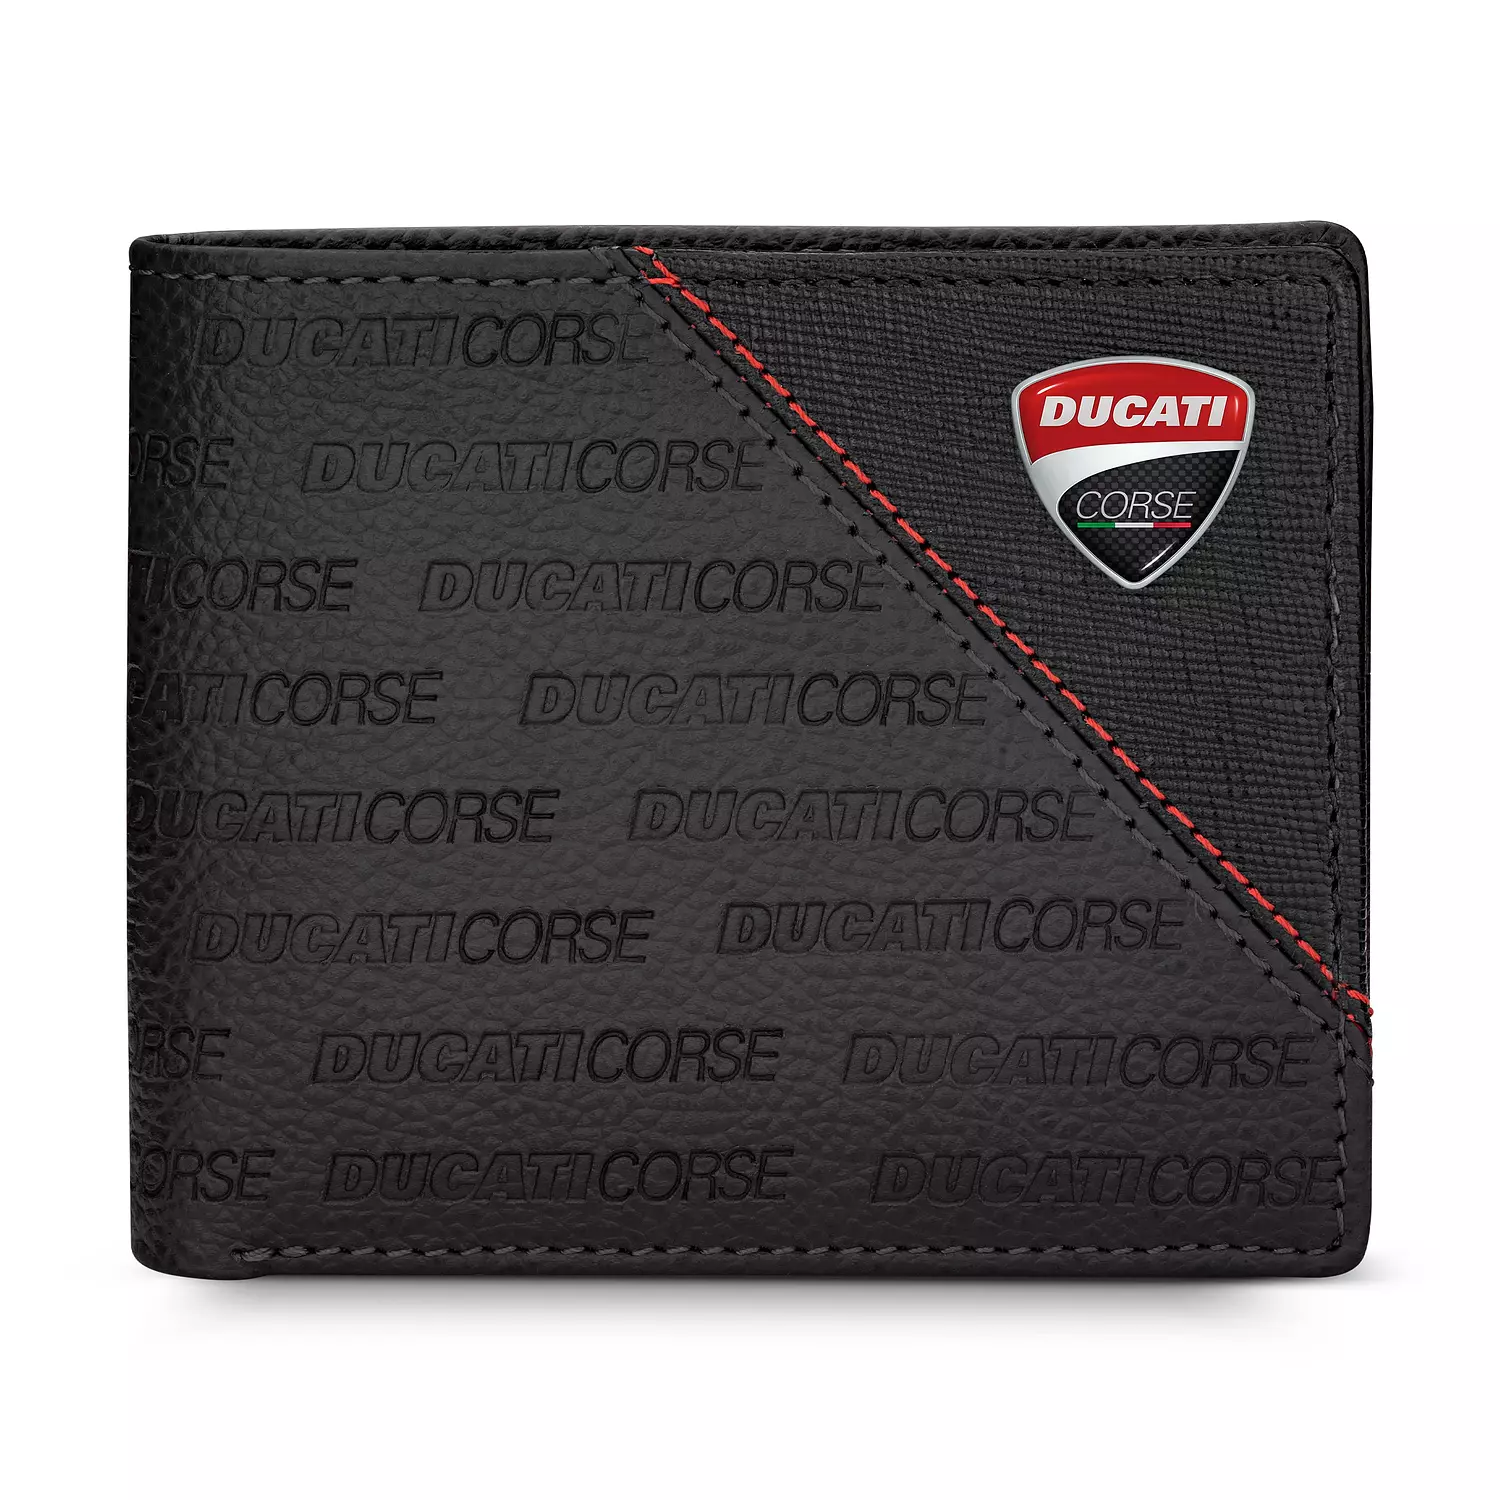 Ducati Corse Black Genuine Leather Wallet For Men Dtlgw2200301 0